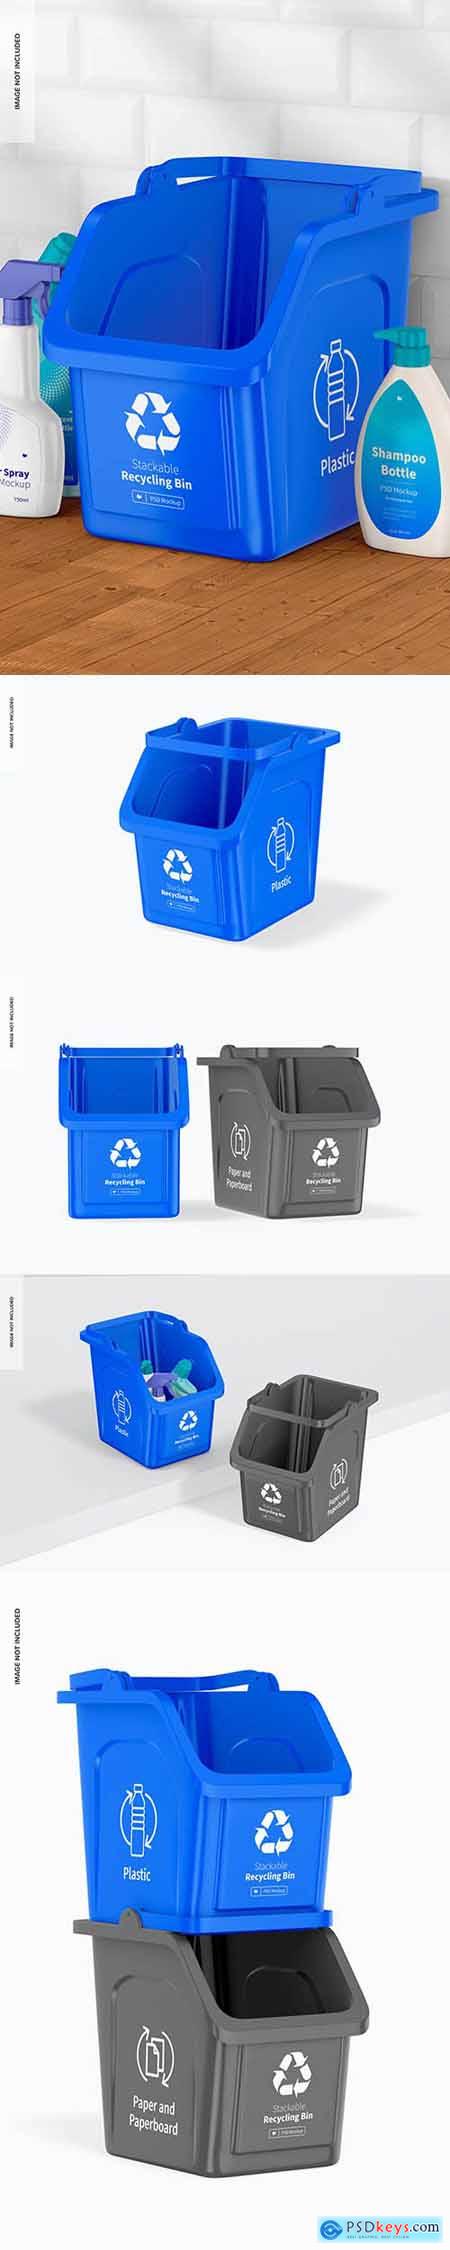 Stackable recycling bins mockup